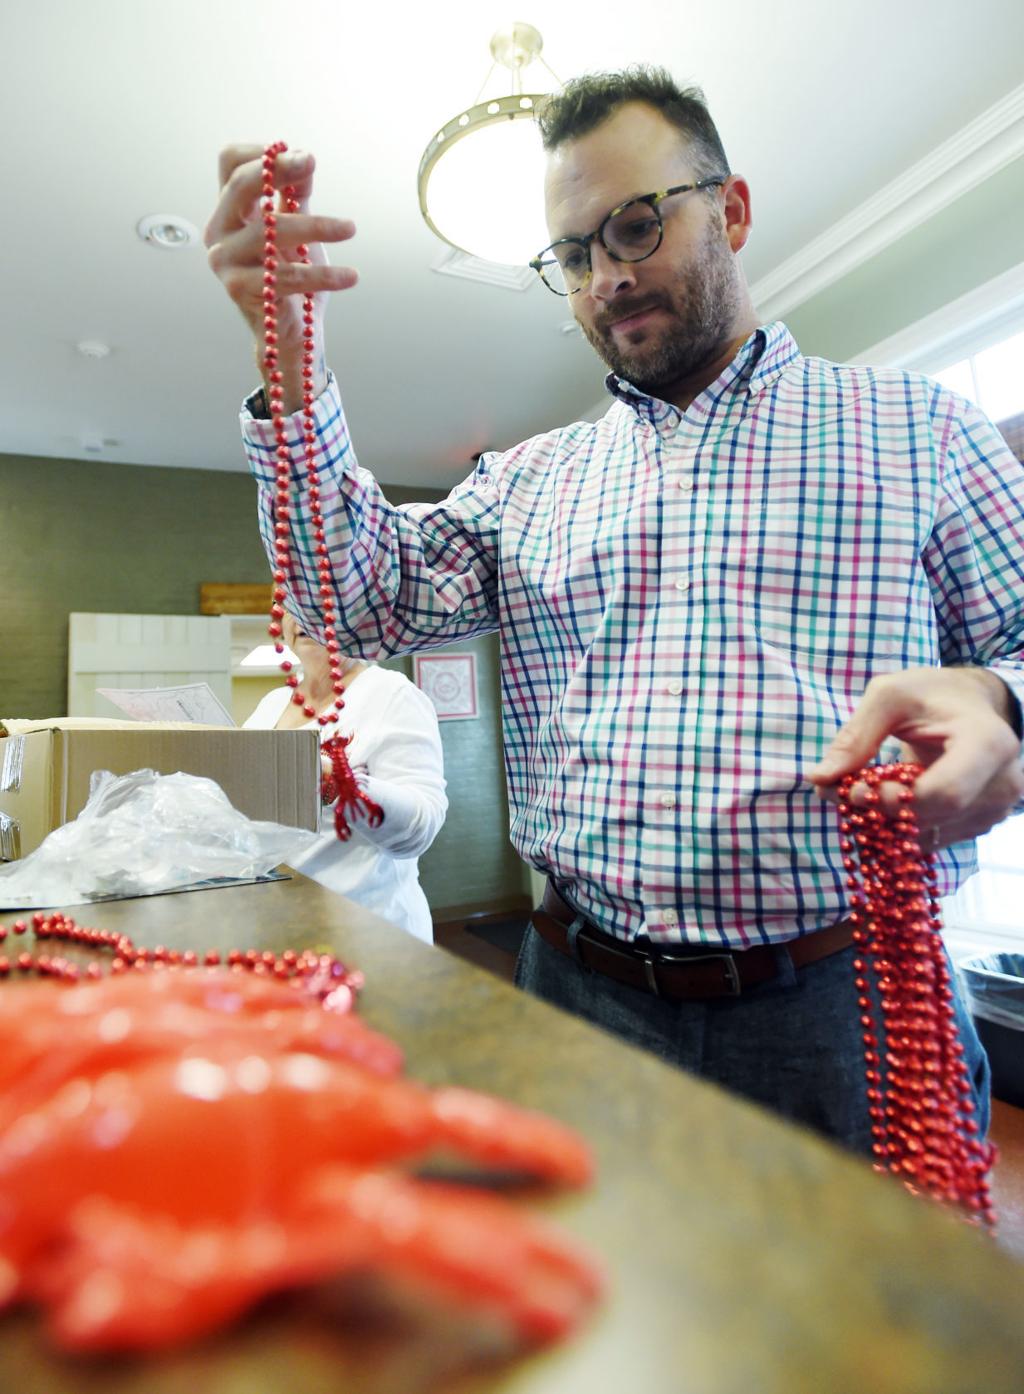 Michigan crawfish invasion? Louisiana experts come to the rescue